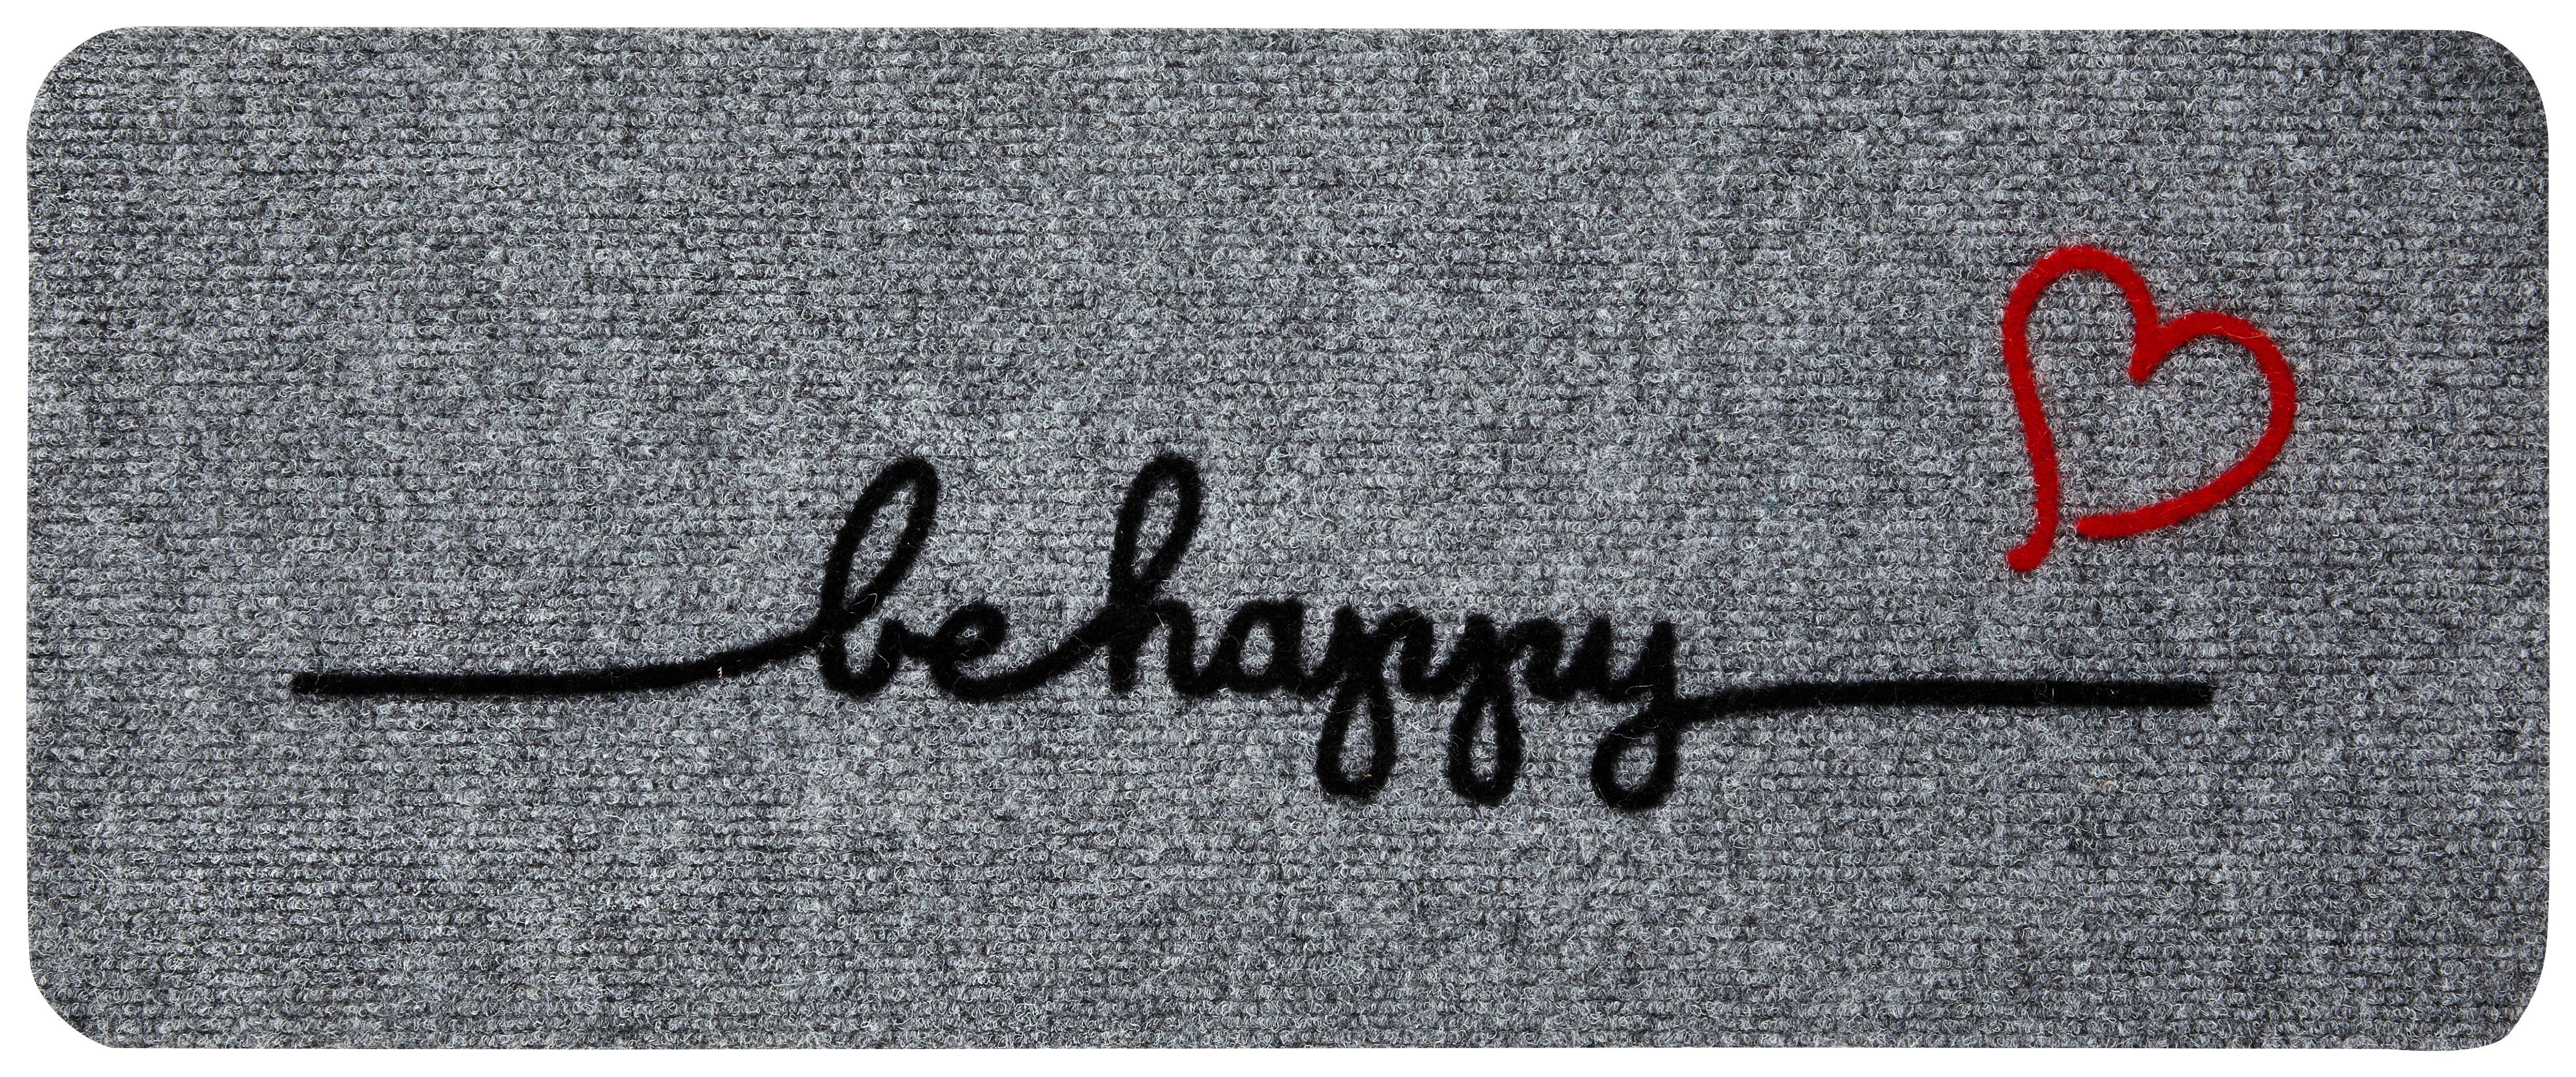 Fußmatte Be Happy in Grau ca. 60x25cm - Grau, MODERN, Textil (60/25cm) - Modern Living